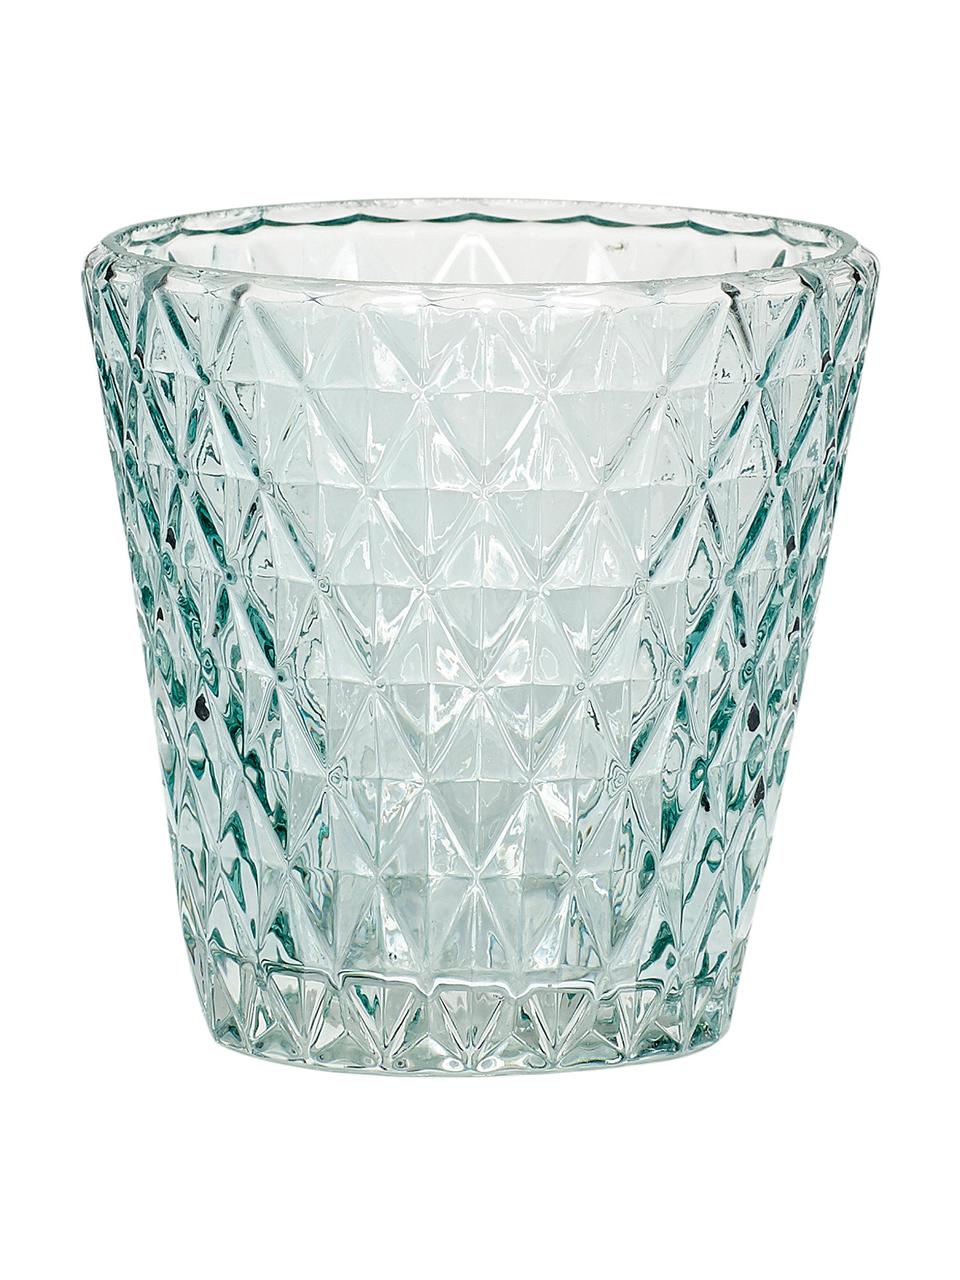 Teelichthalter Elsa, Glas, Hellblau, transparent, Ø 10 x H 10 cm